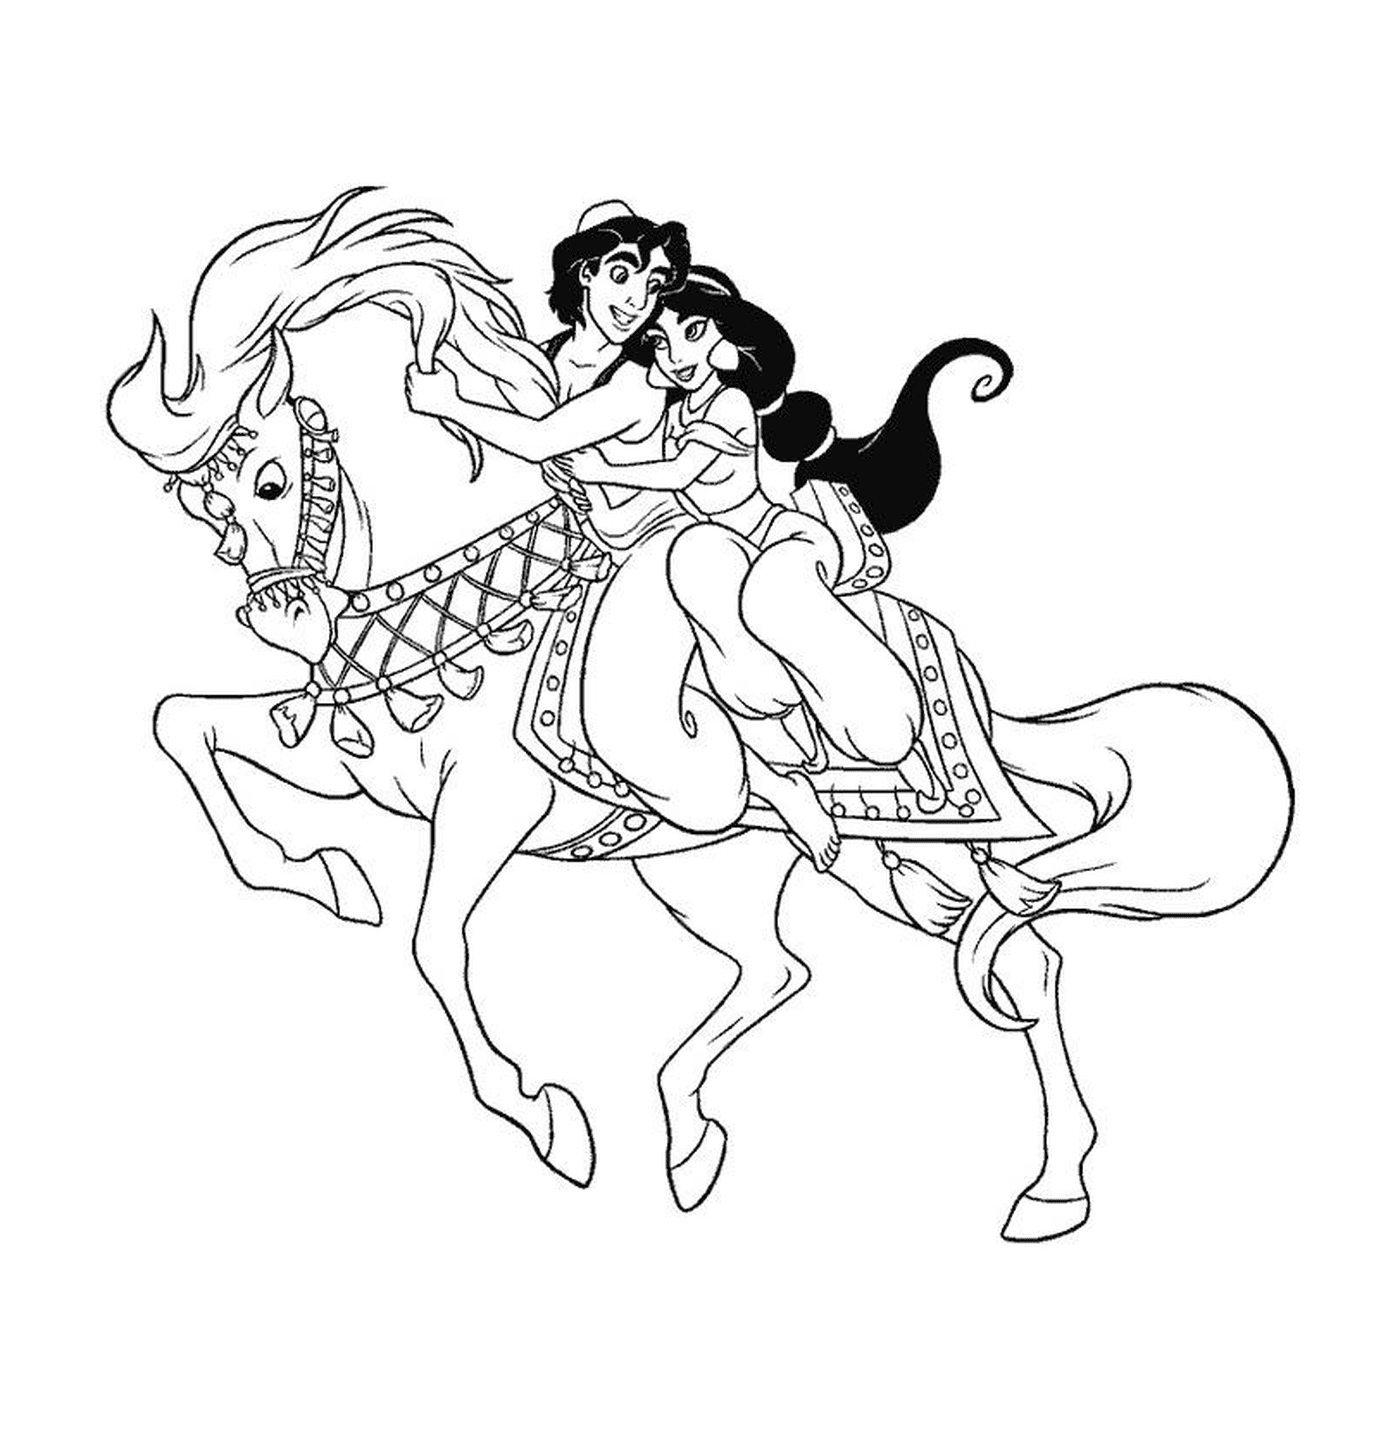   Aladdin et Jasmine sur un cheval 